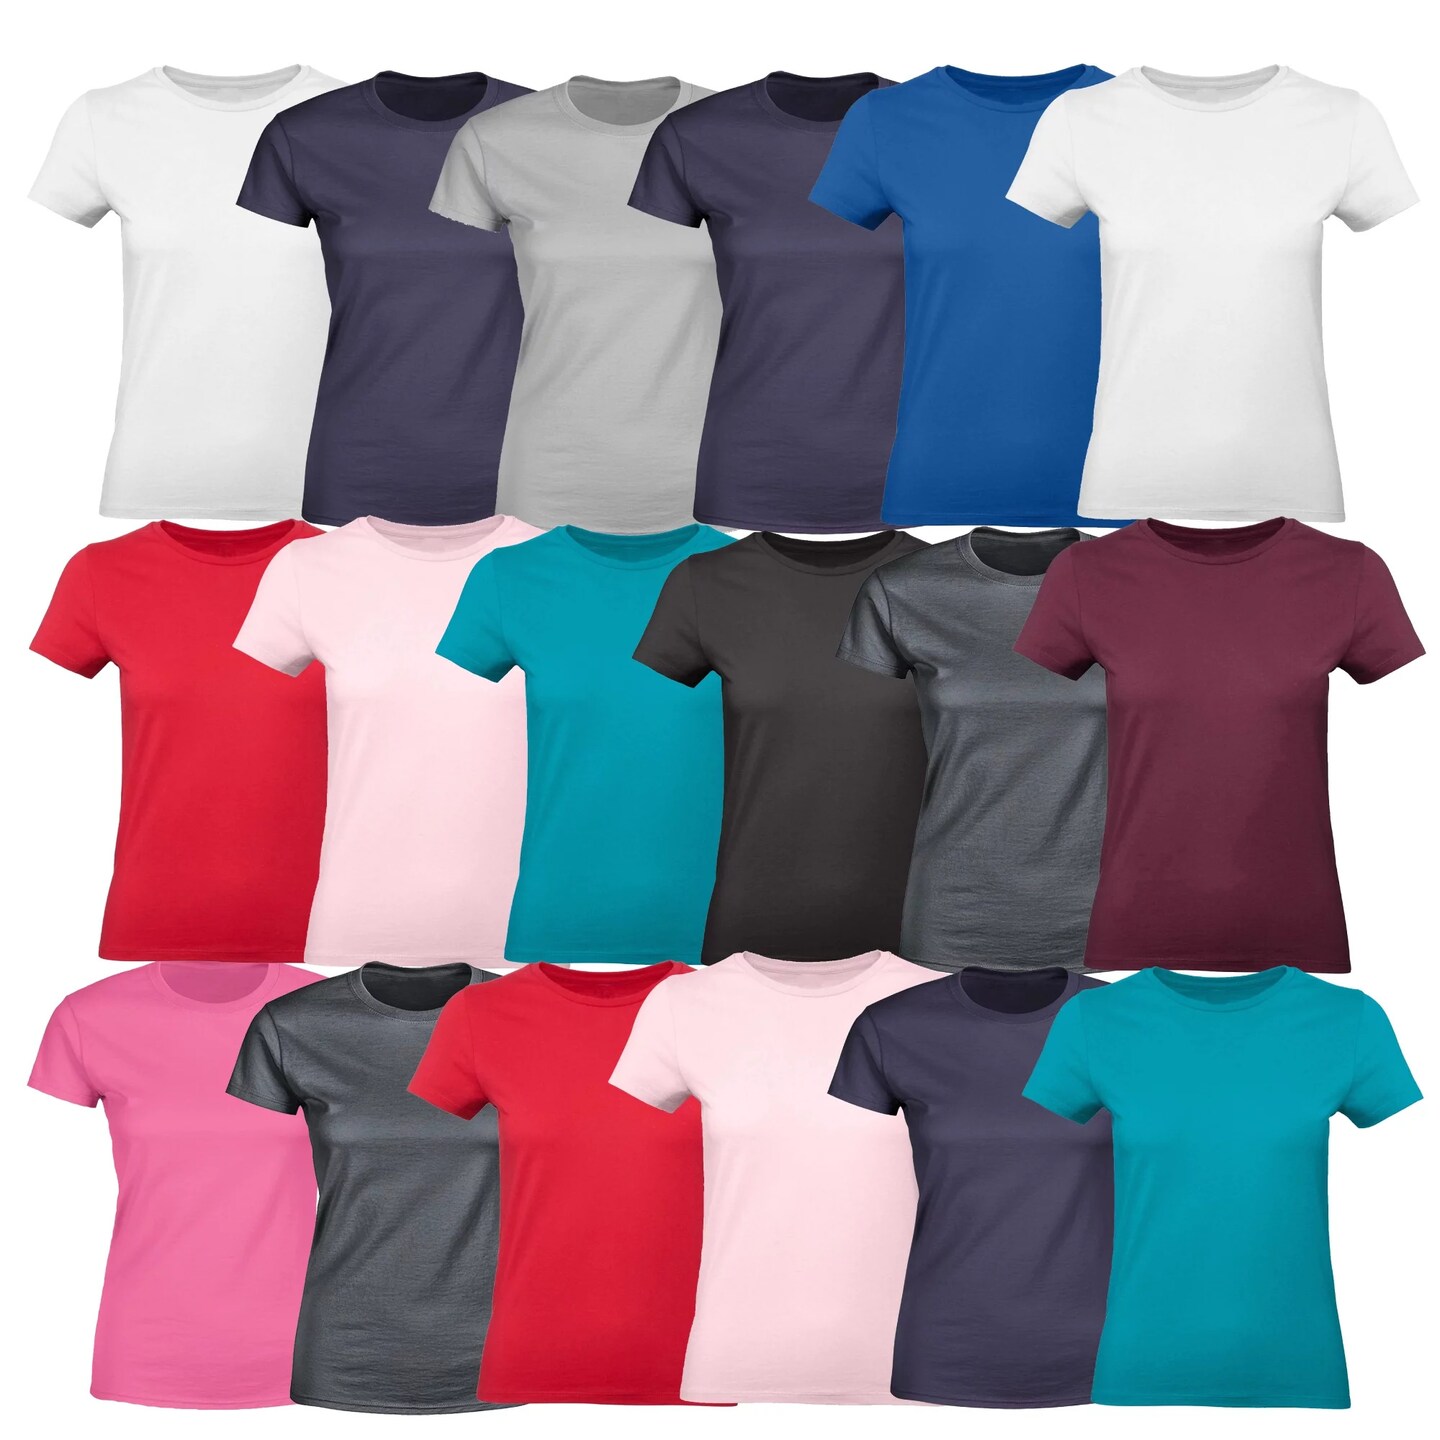 Multipack Women's 4.3-oz 100% ring-spun combed cotton plain t-shirt - Ladies'  Solid Color Tees - Basic Women's Tops - Plain crew neck shirts for women.  Radyan women's t-shirt, RADYAN®